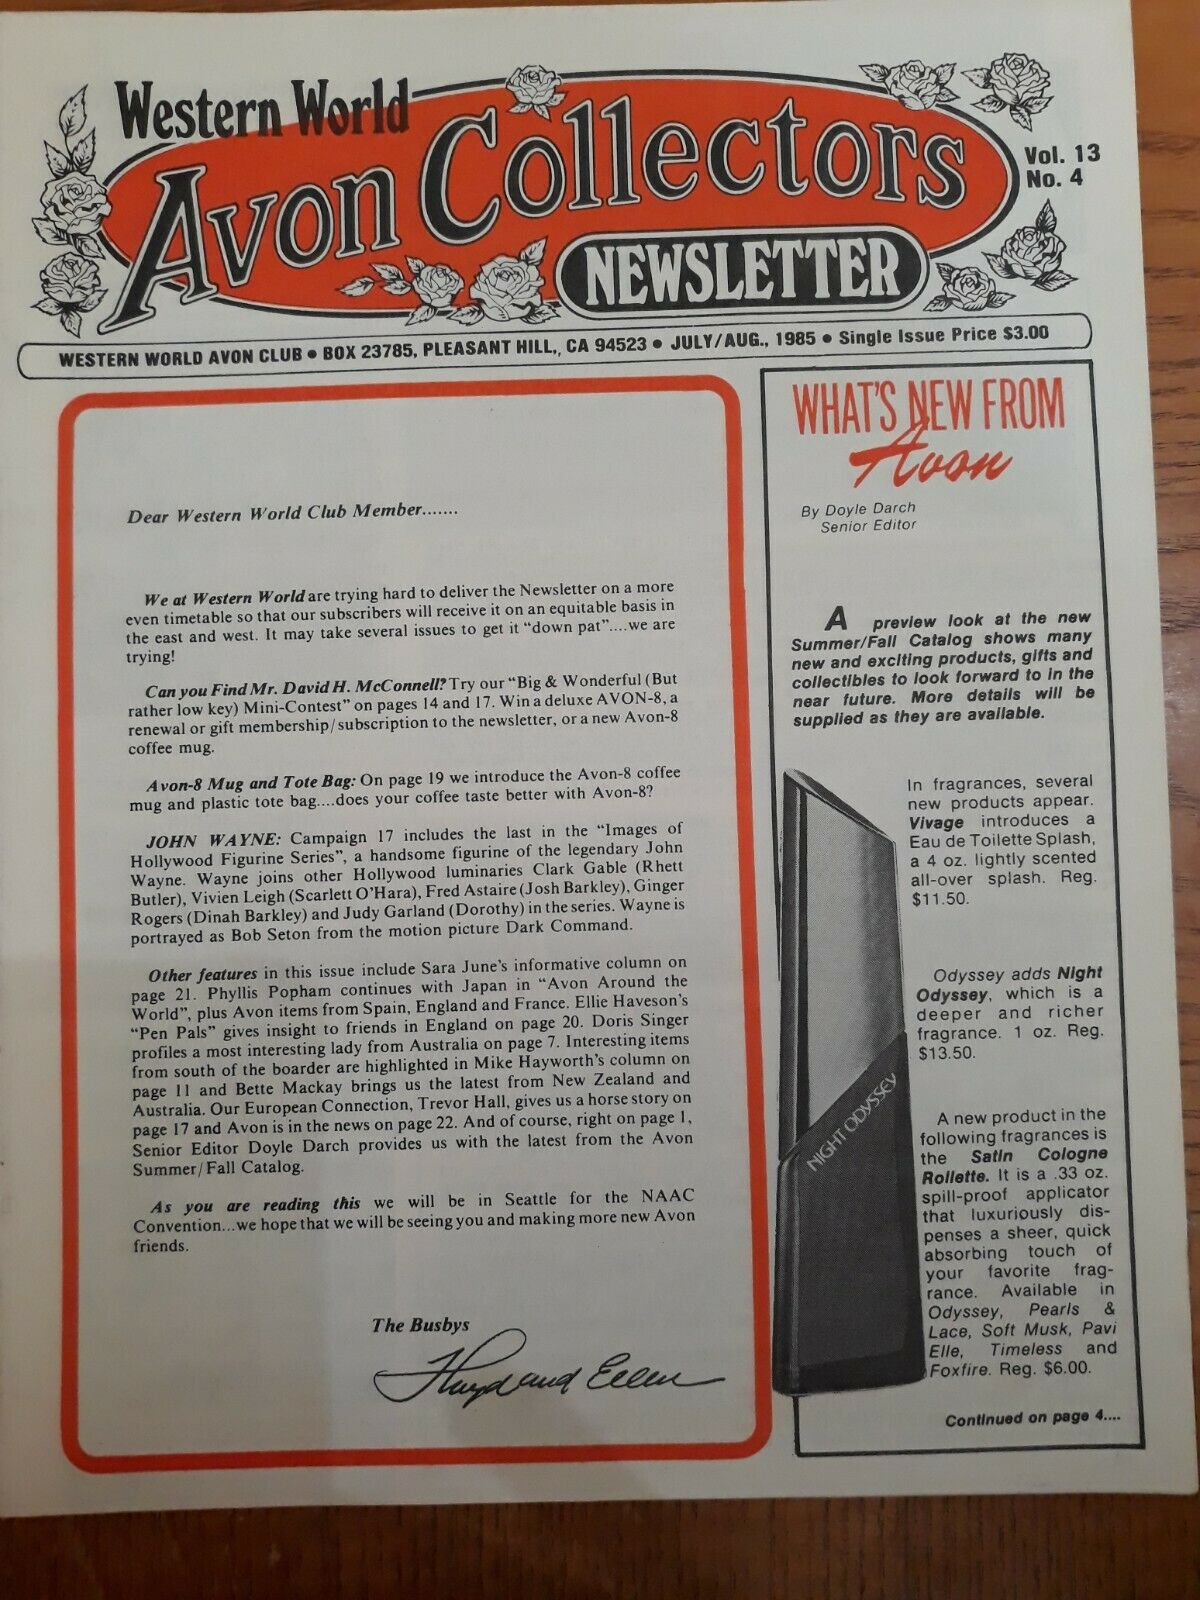 Western World Avon Collectors Newsletter - Vol 13 No 4 - March/april 1985